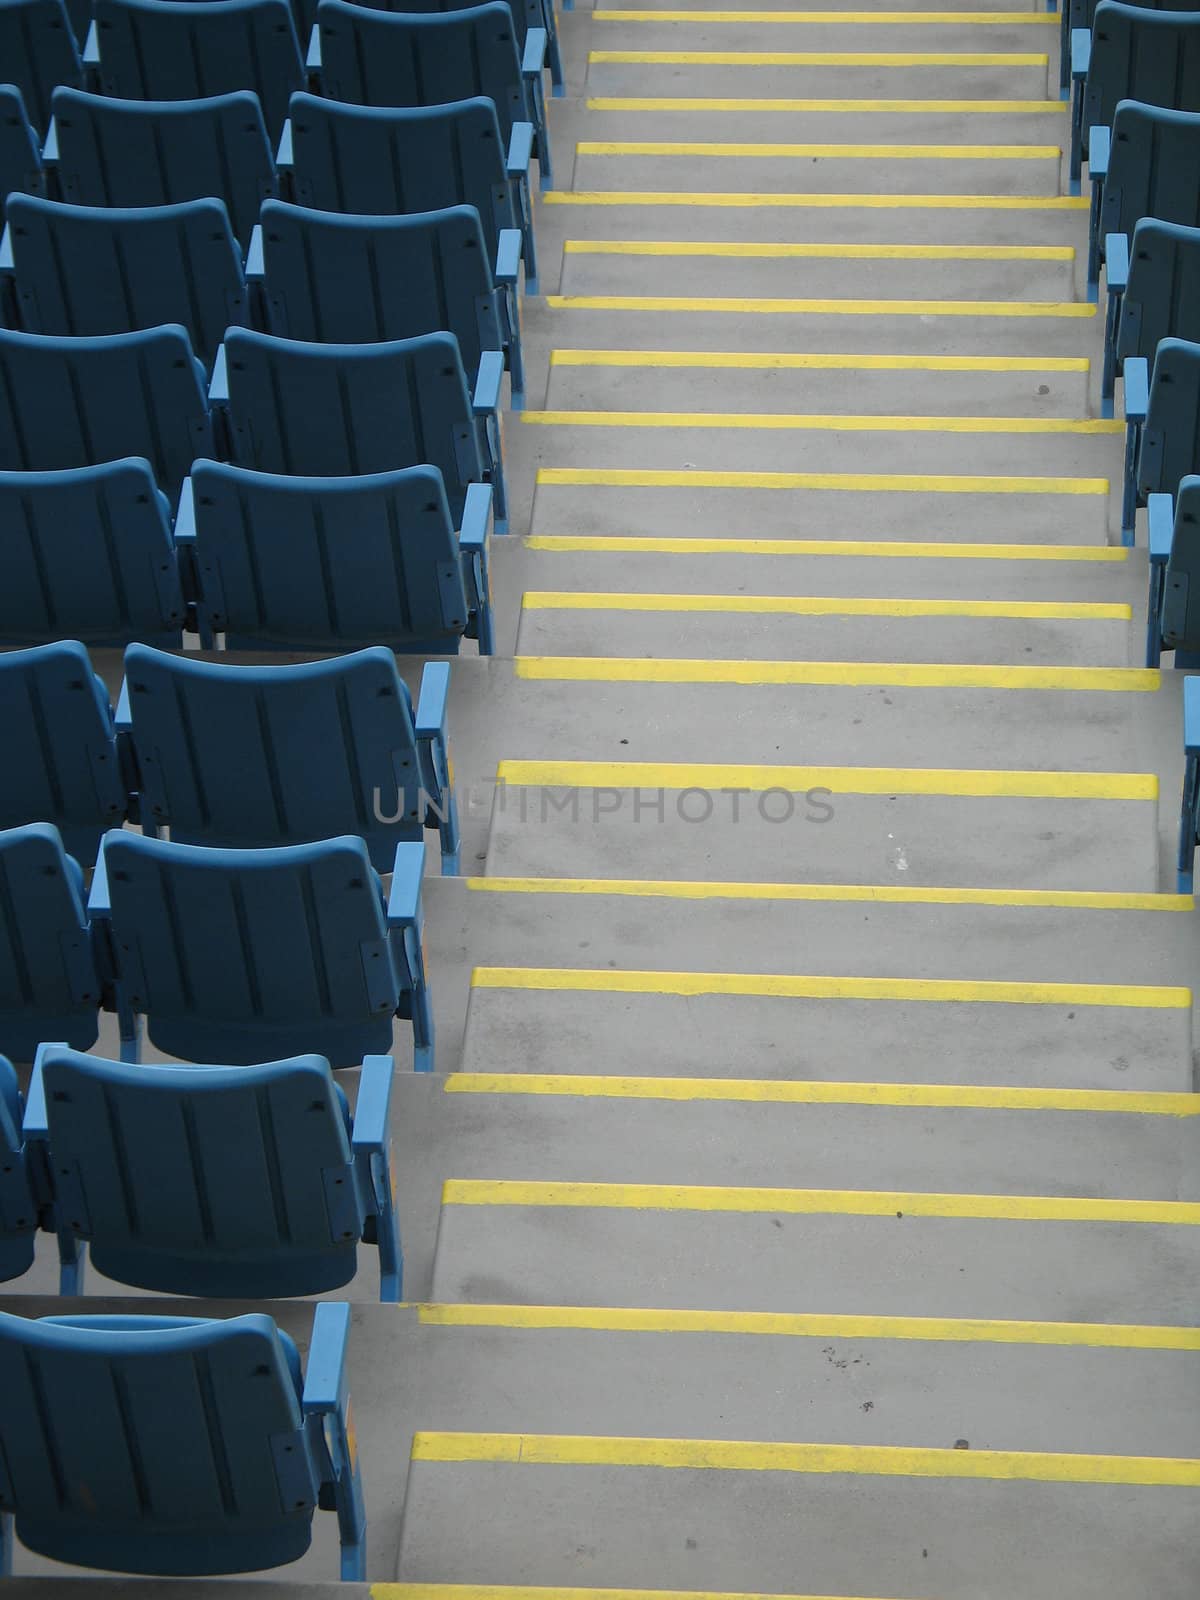 event seats